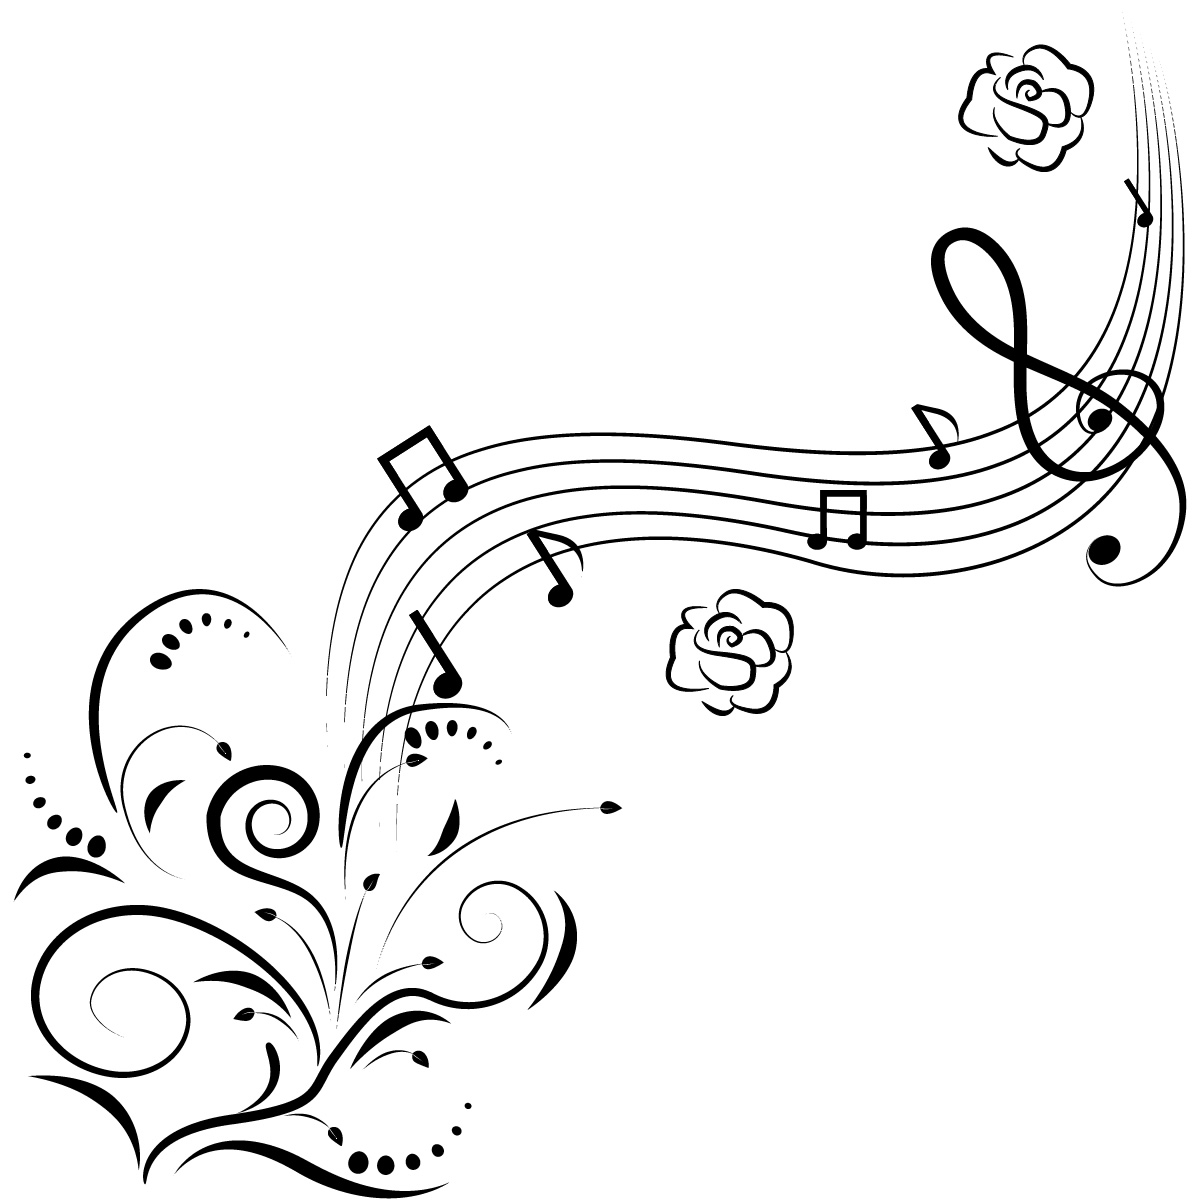 Art of music | Music art drawing, Music drawings, Music notes art